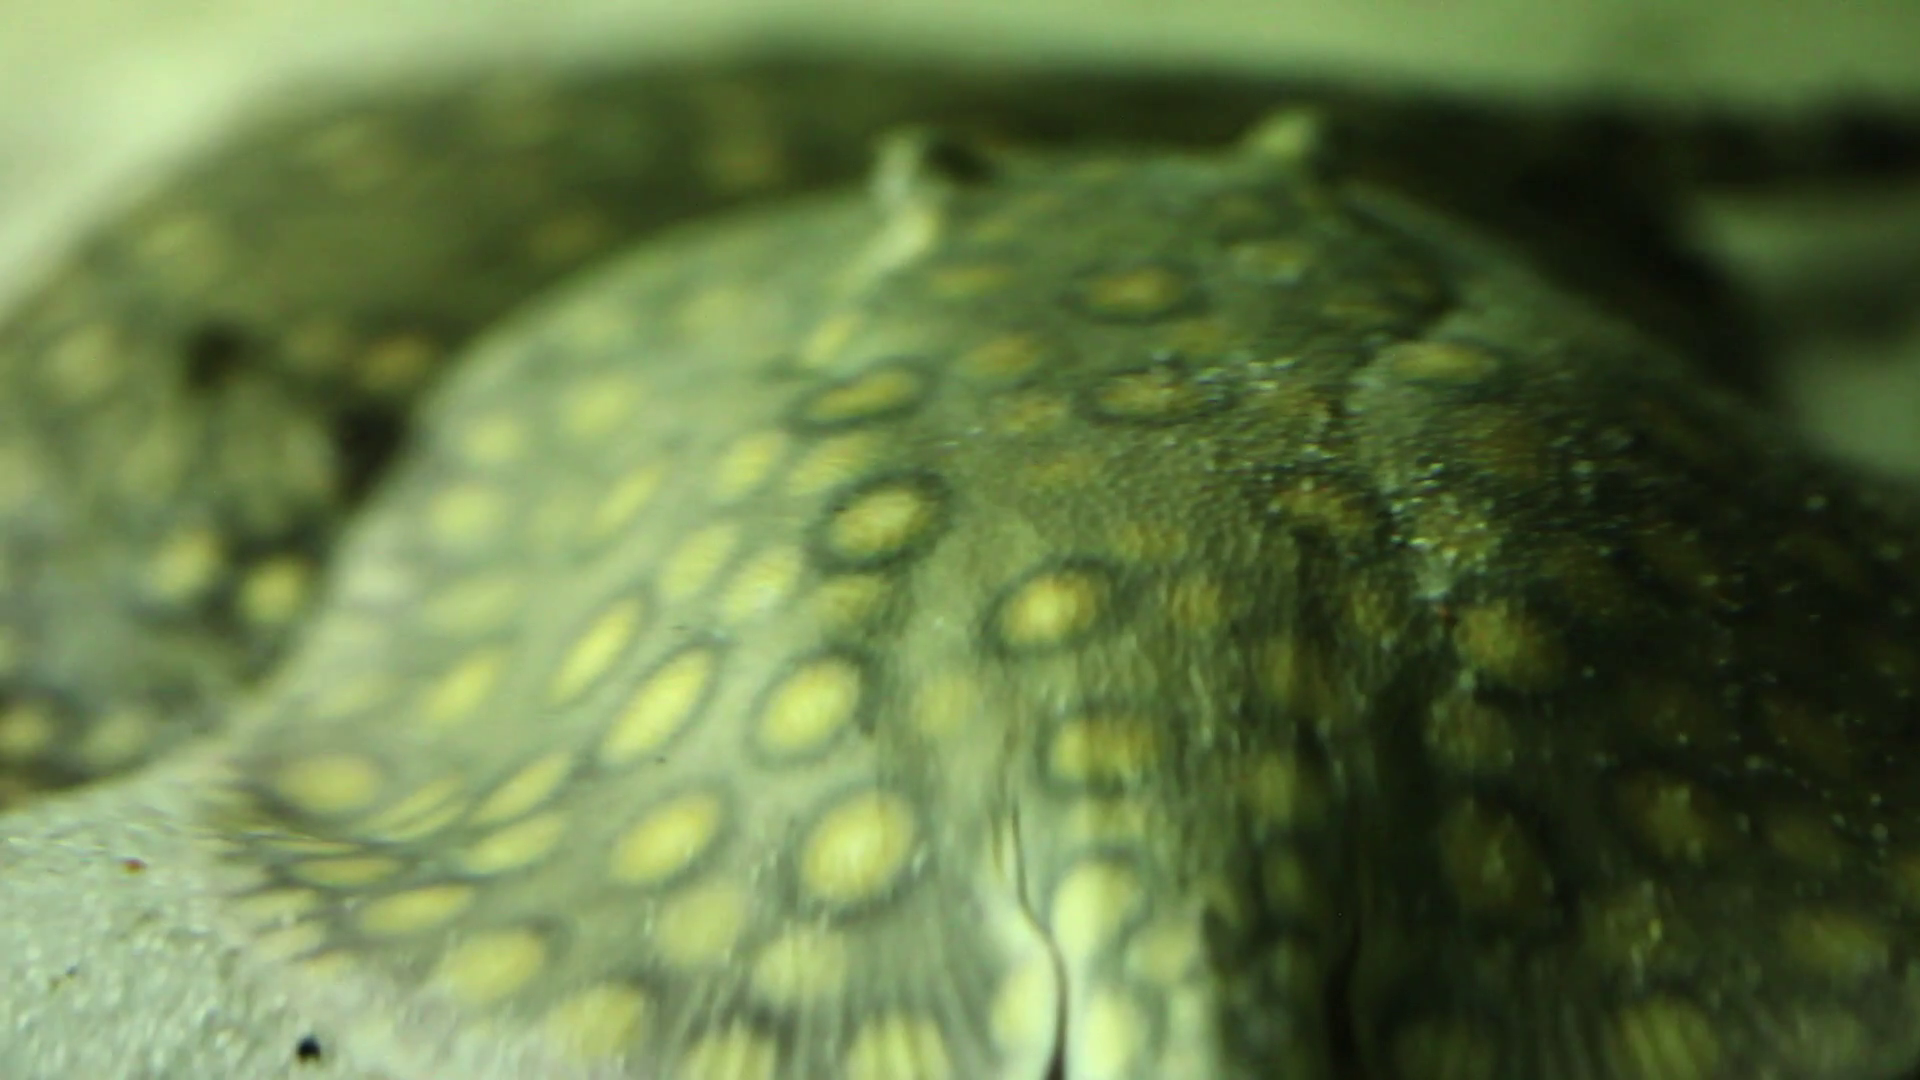 Stingray (Dasyatis brevis), feeding in the sand of the aquarium ...